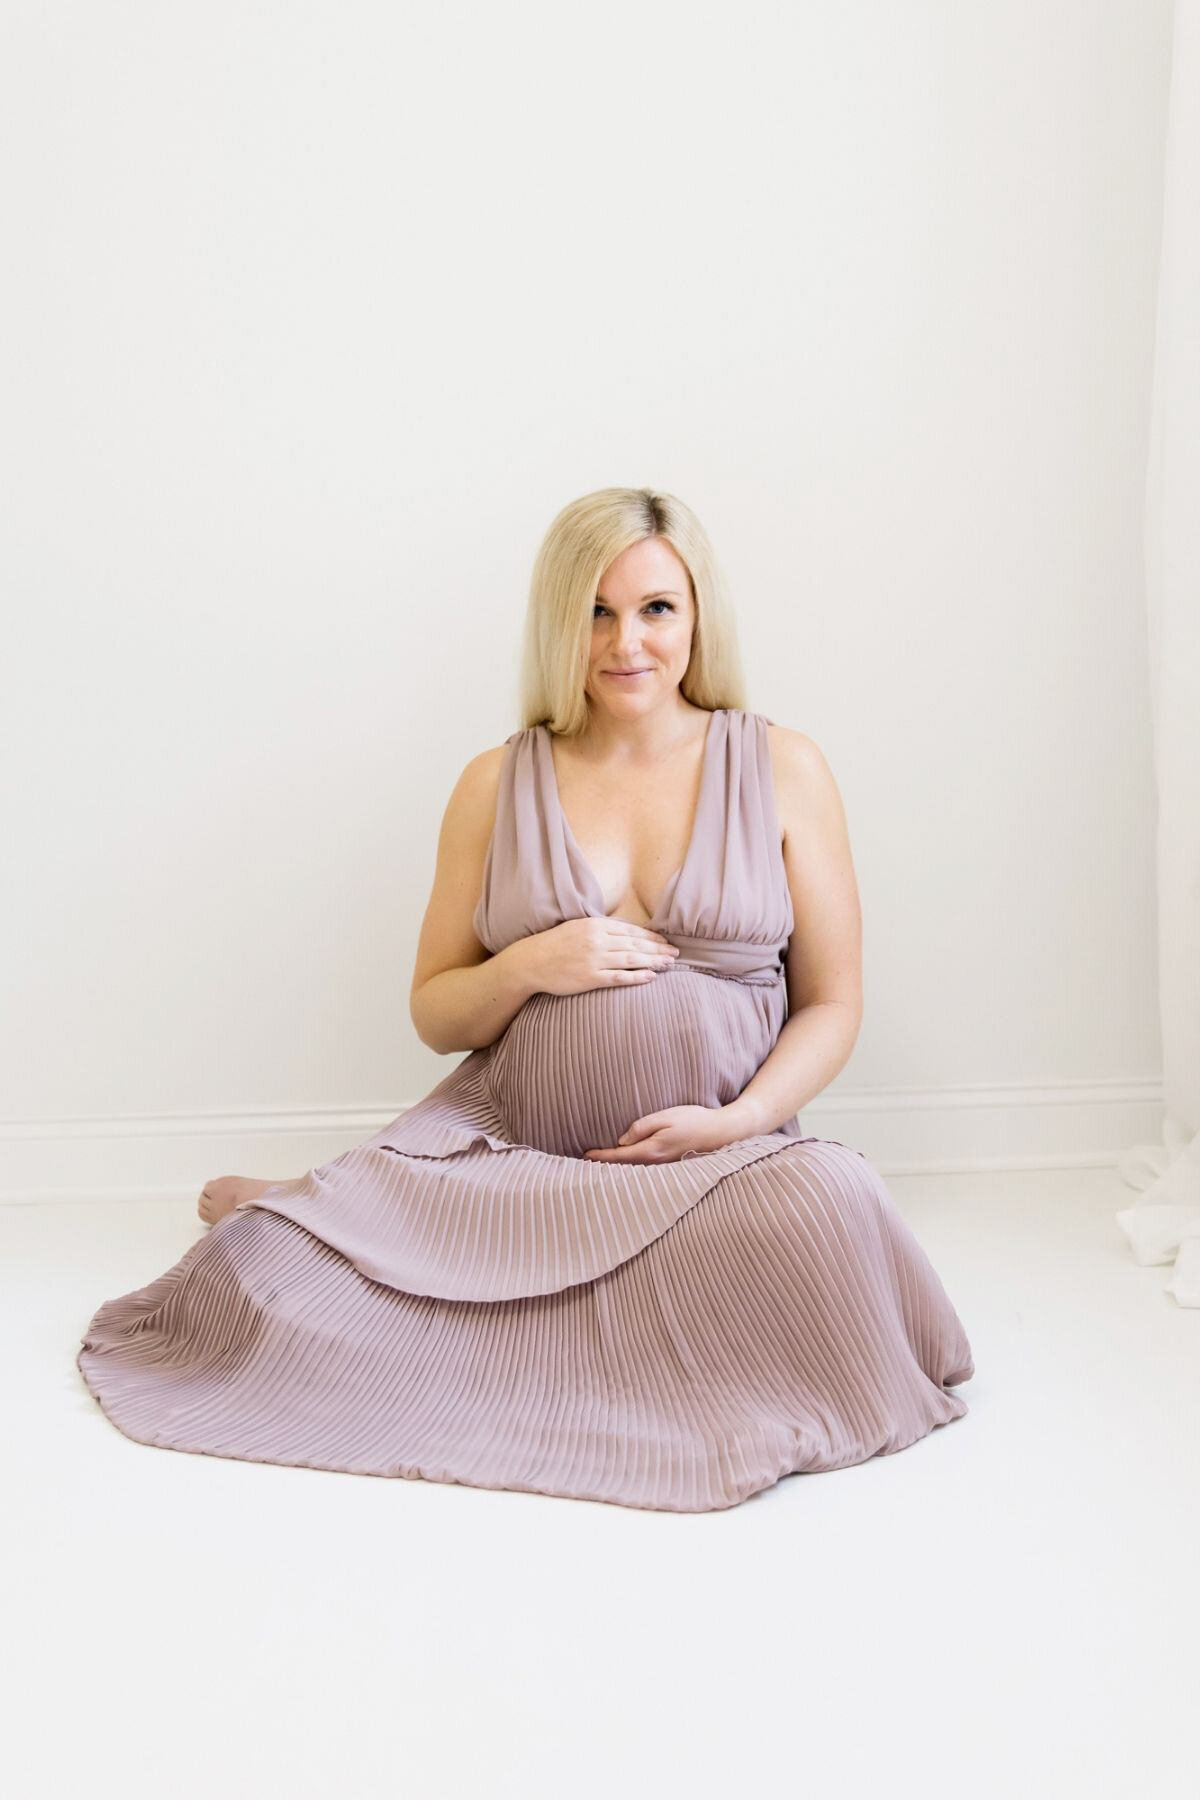 Maternity portrait in studio by Charlotte Maternity Photographer Anna Wisjo